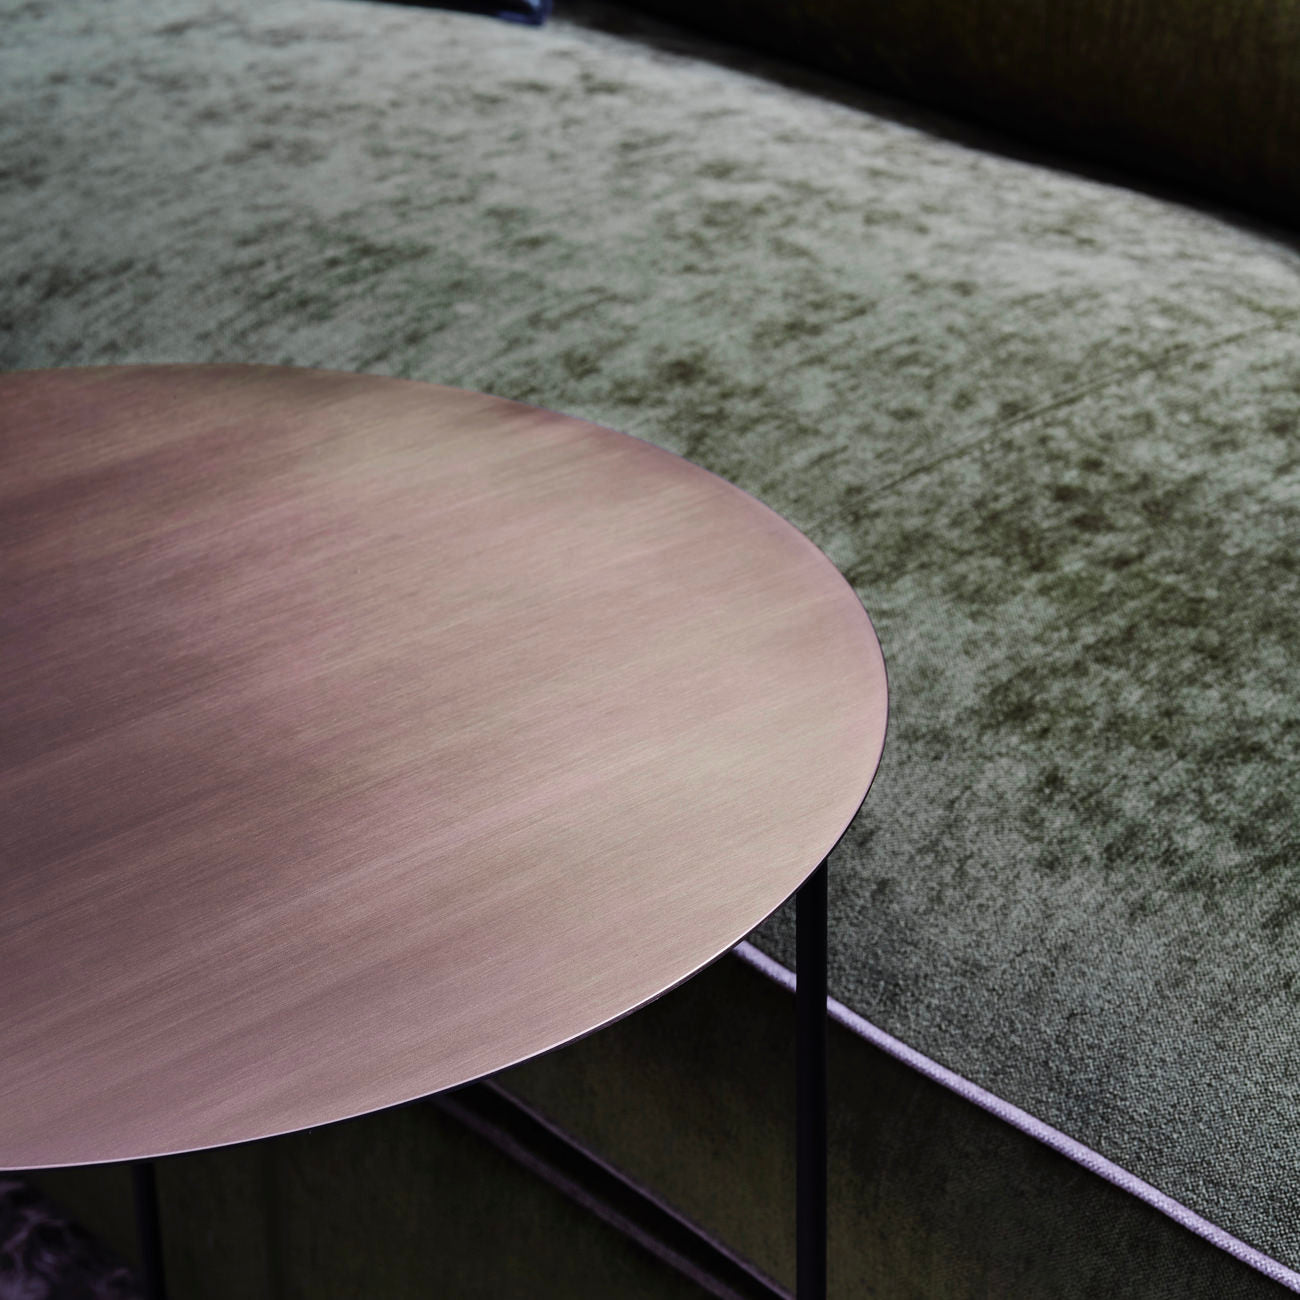 MIO 43-2 table by Christine Kröncke Interior Design